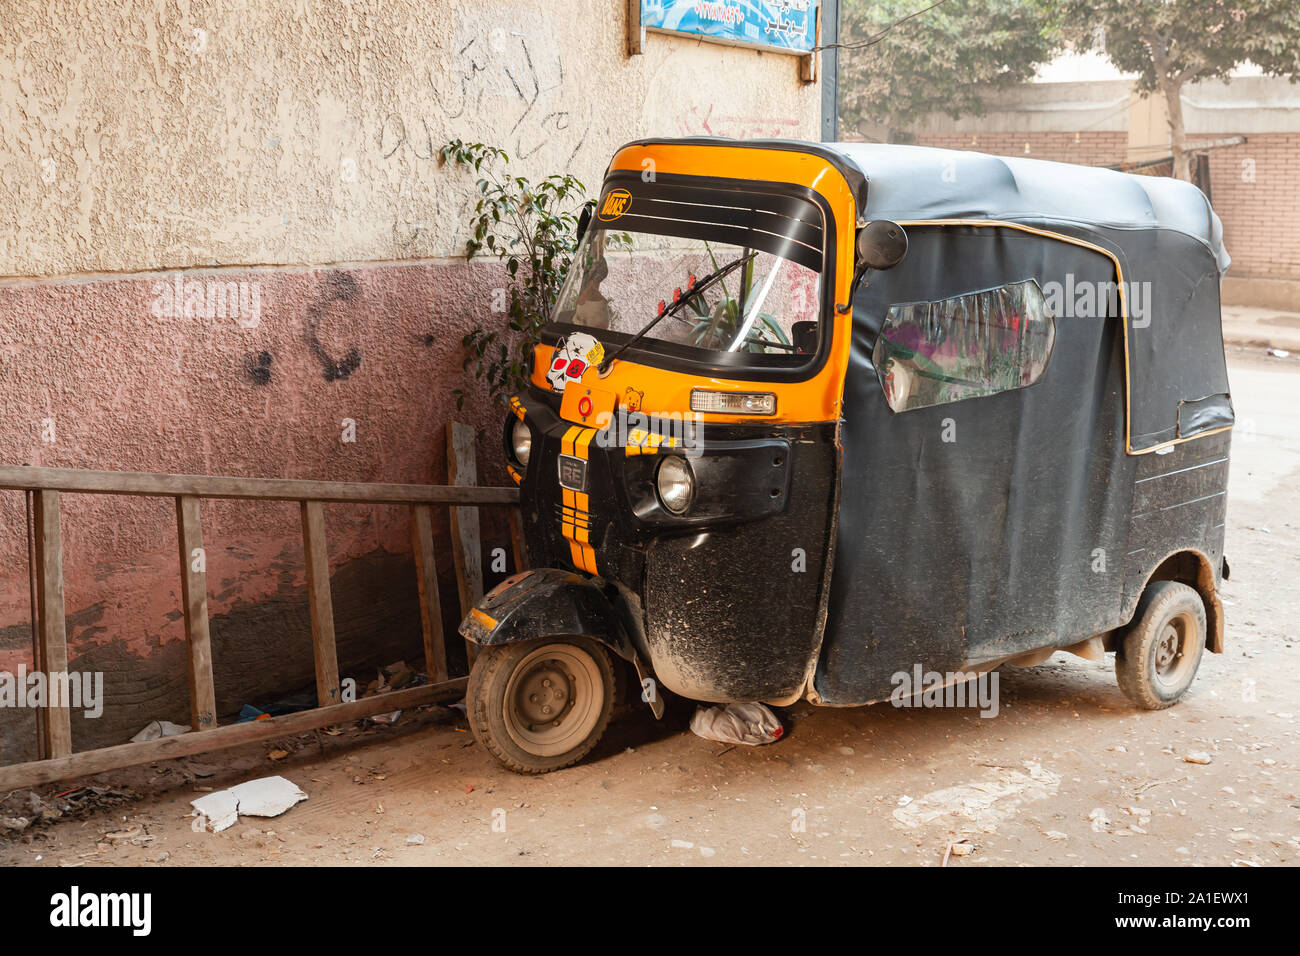 Alexandria, Egypt - December 18, 2018: Yellow black auto rickshaw stands parked on a street Stock Photo